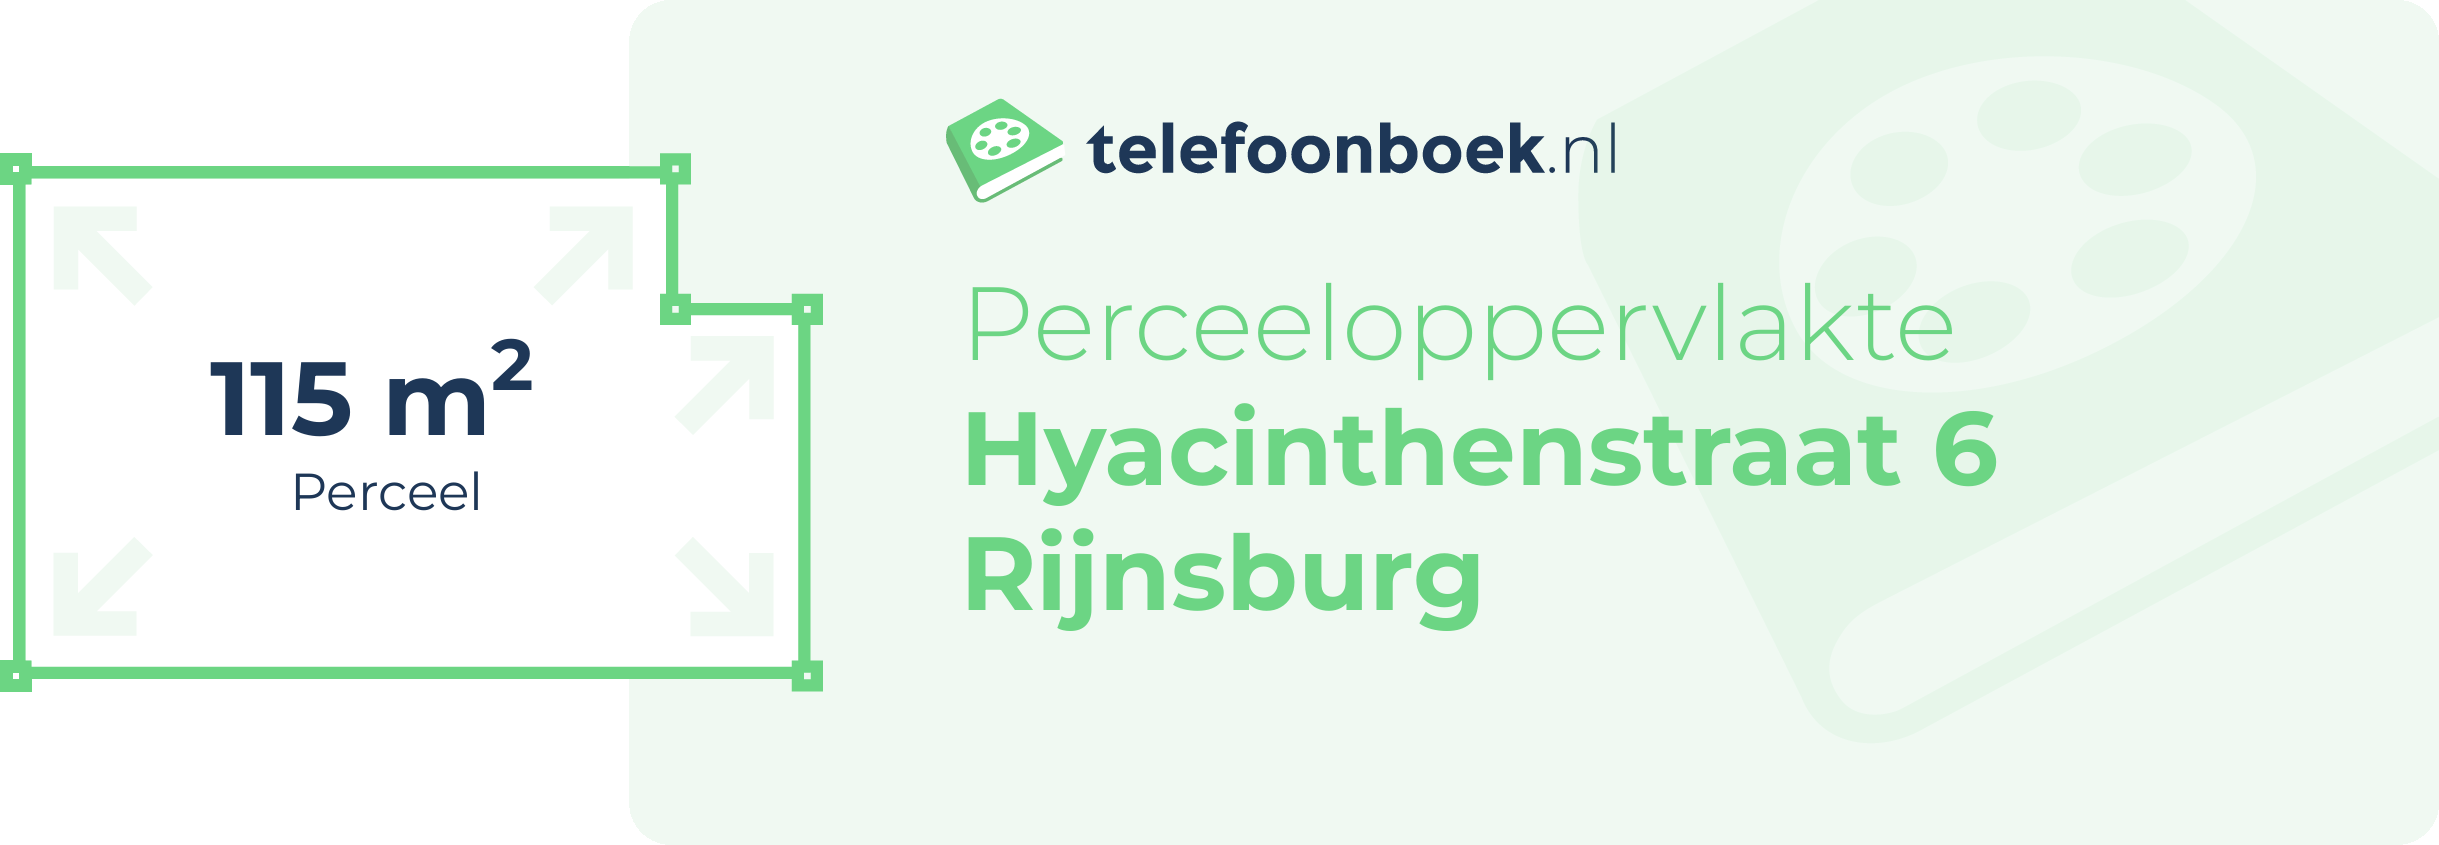 Perceeloppervlakte Hyacinthenstraat 6 Rijnsburg